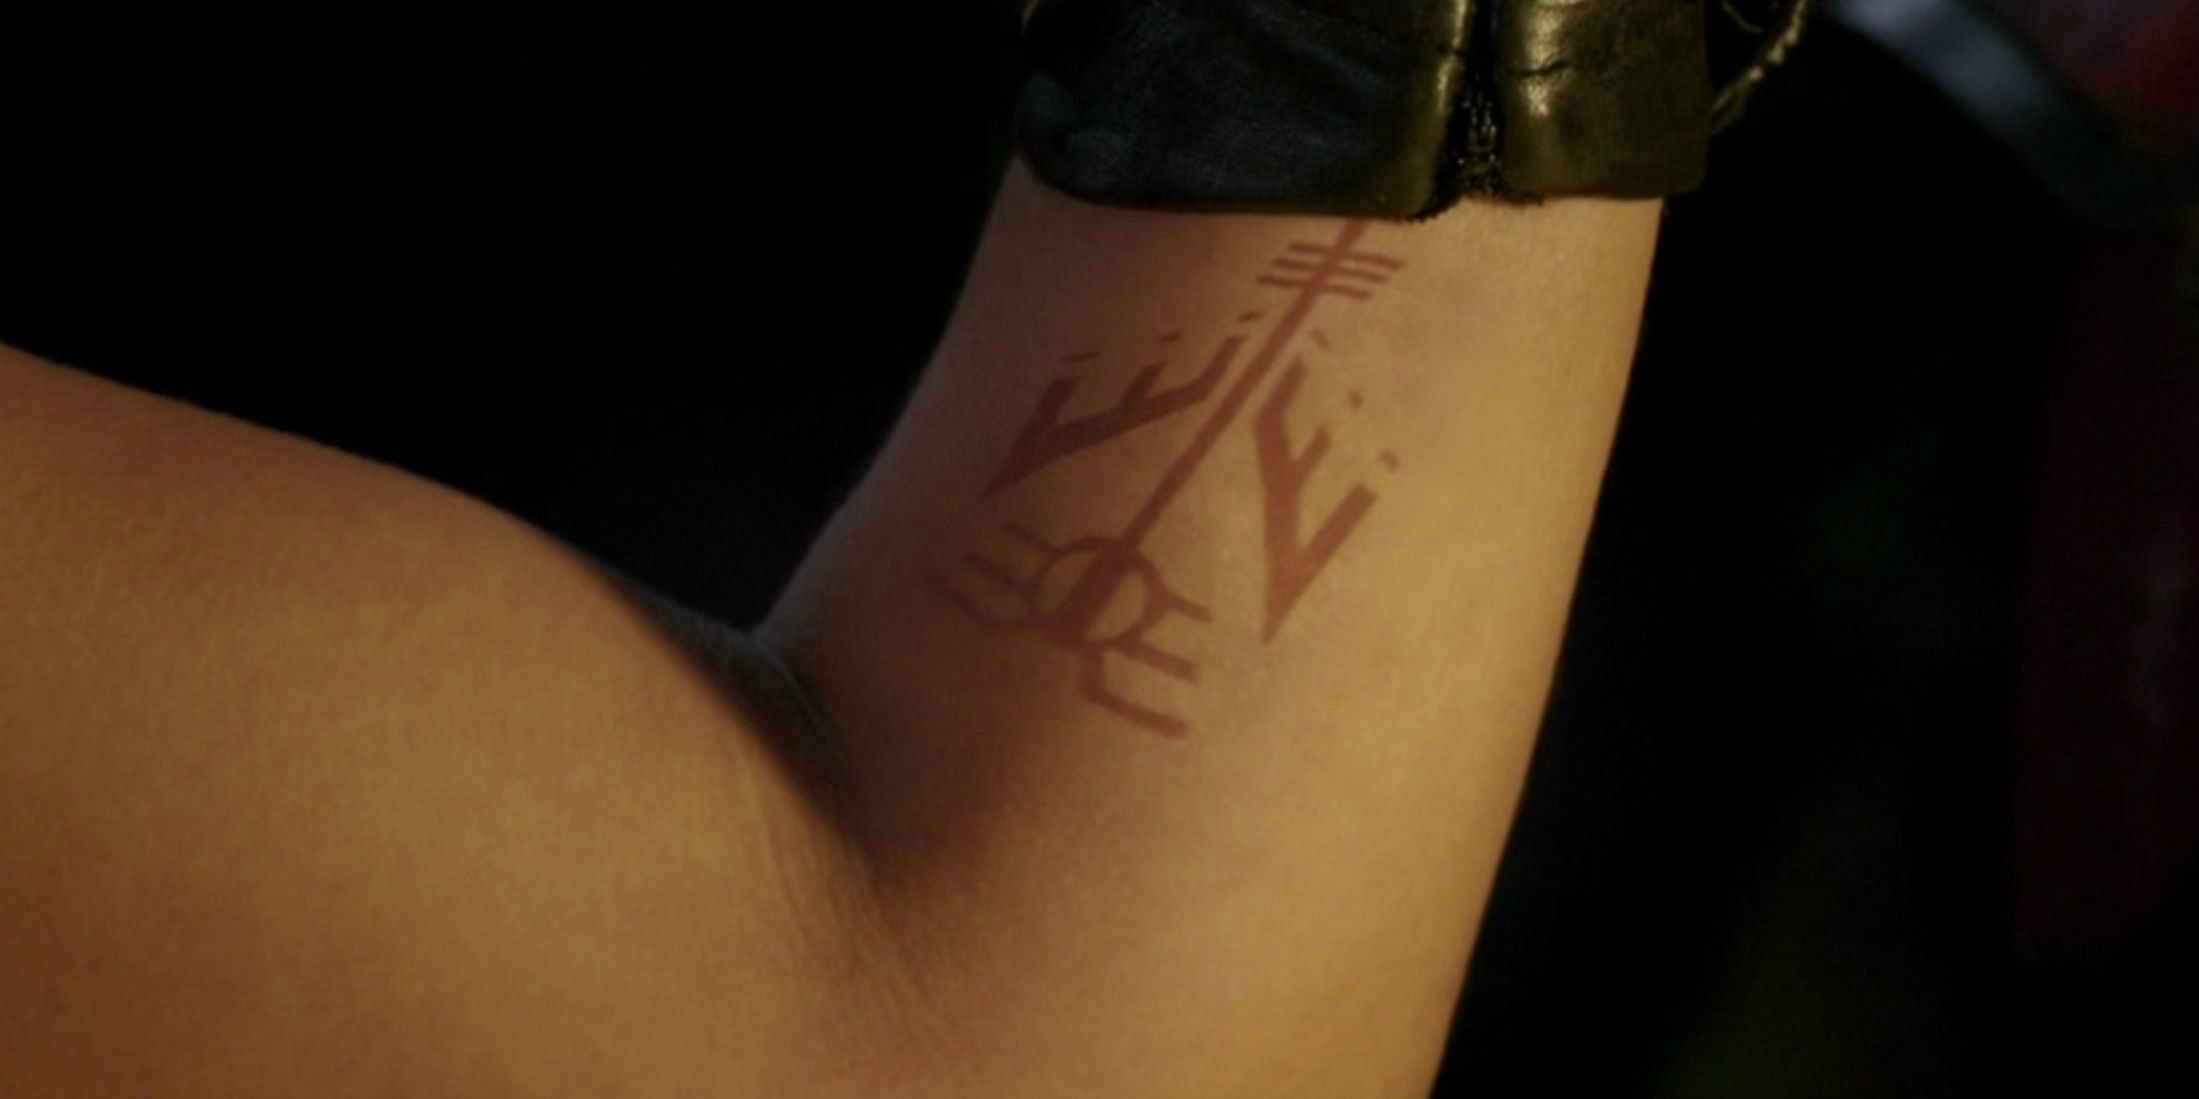 A closeup of the tattoo on Tessa Thompson's arm as Valkyrie in Thor: Ragnarok